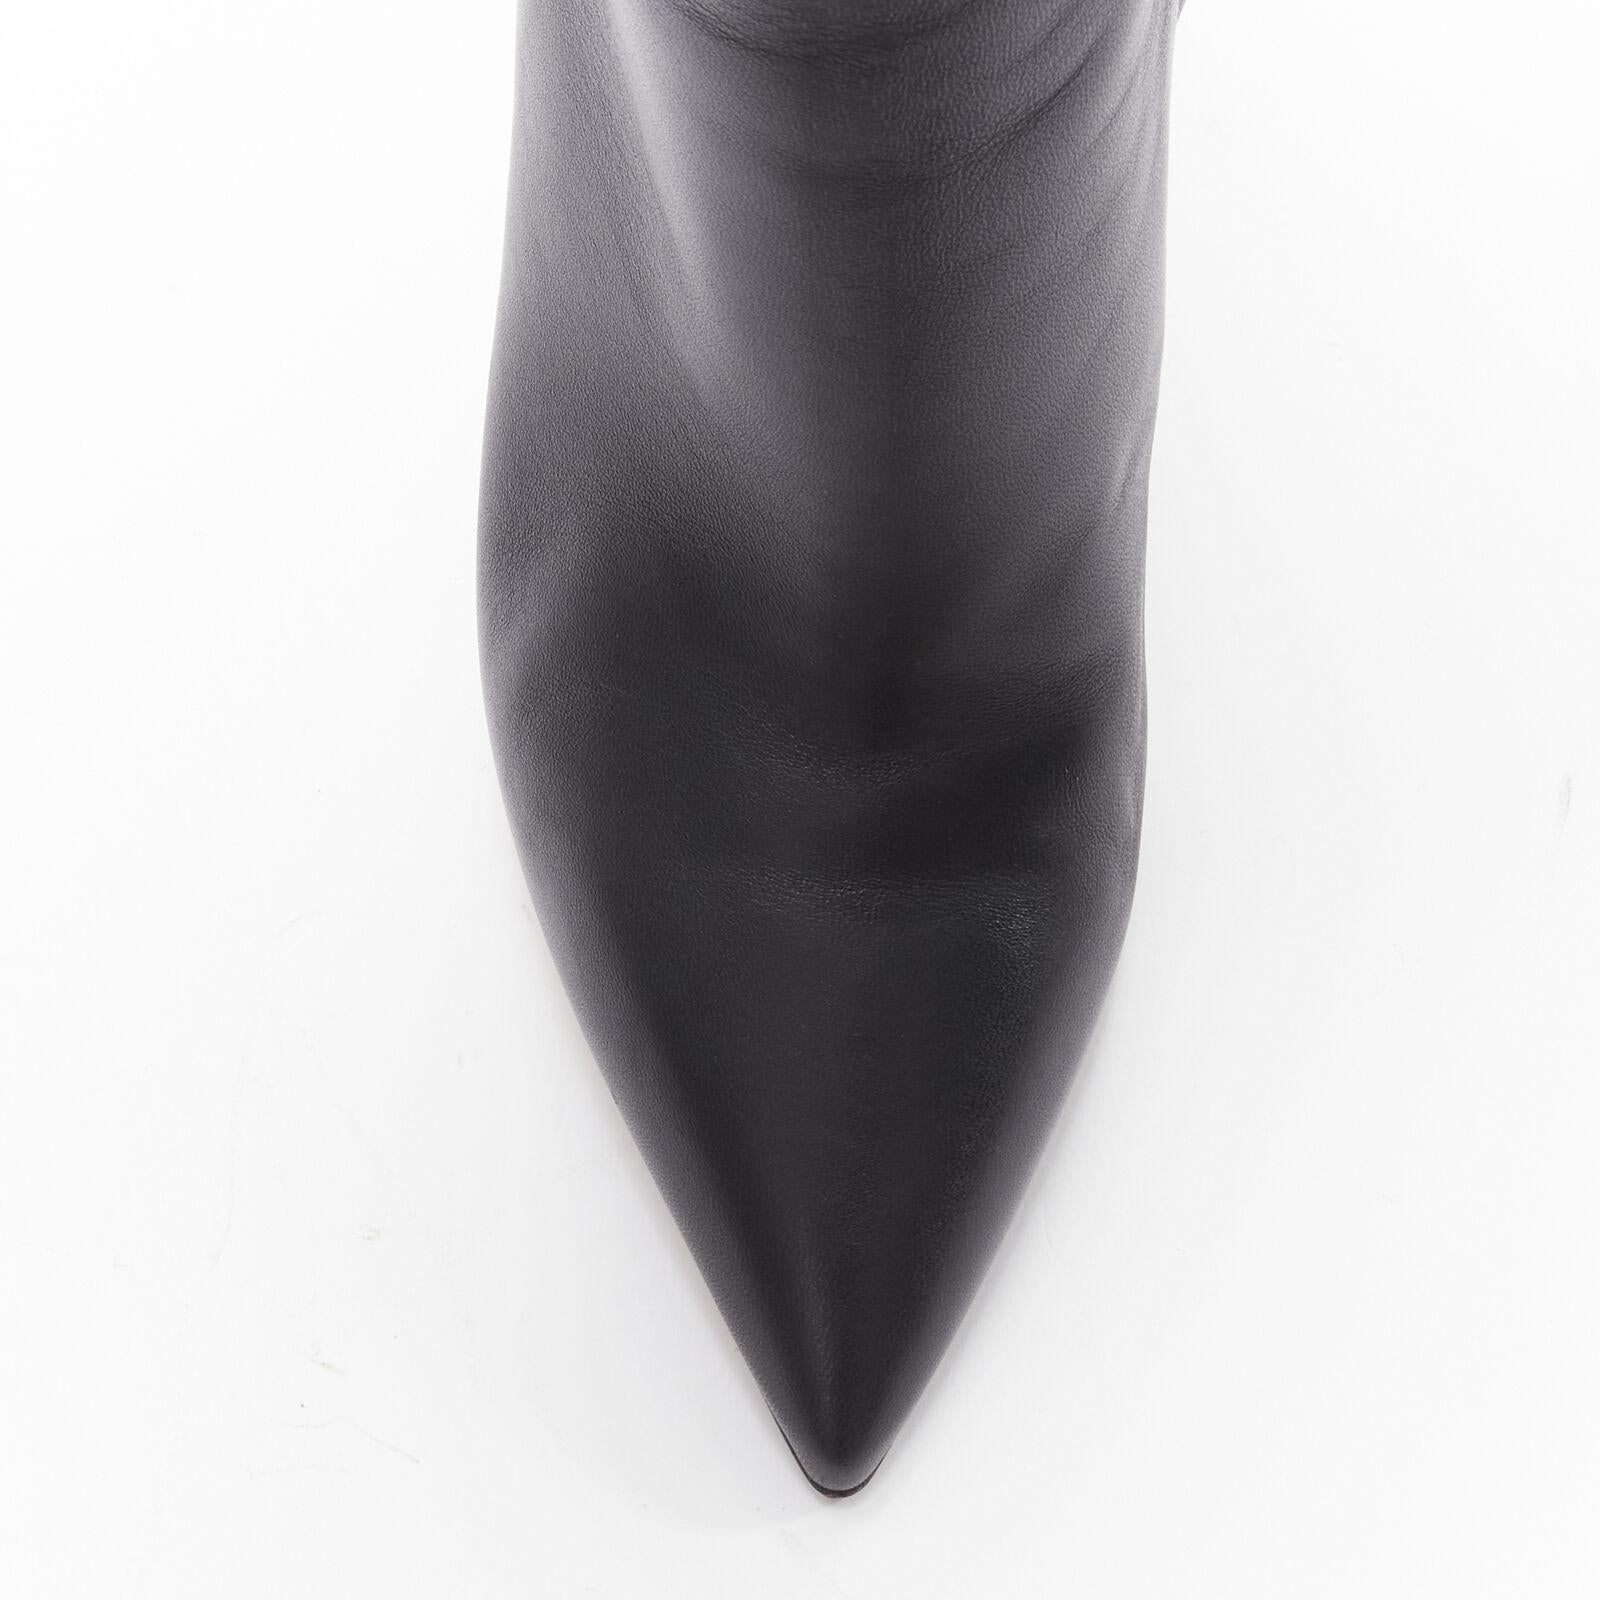 GIANVITO ROSSI black leather point toe spool heeled tall boots EU39 US9 3